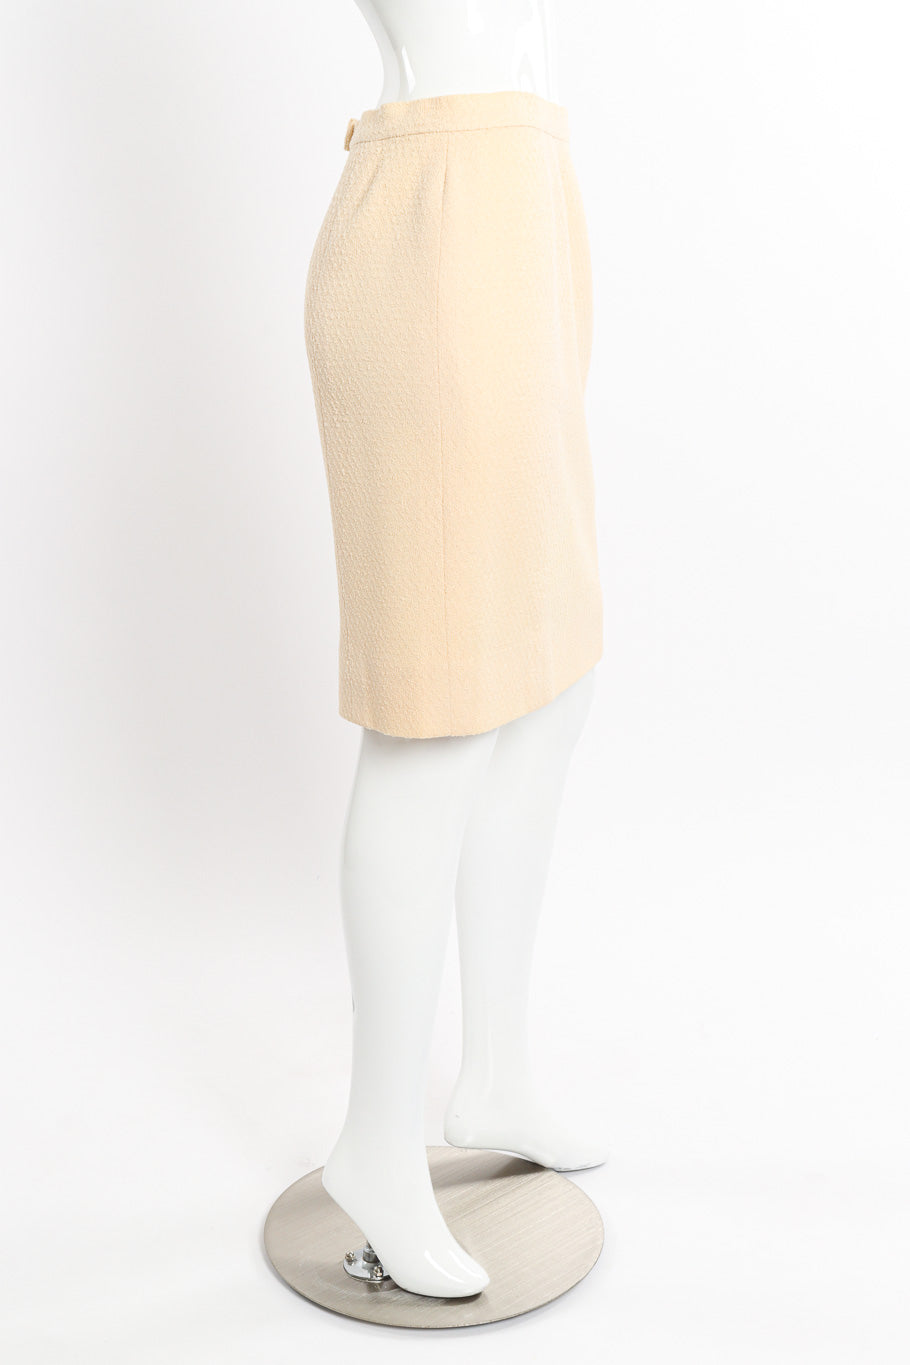 Chanel Knit Bouclé Jacket and Skirt Set skirt side on mannequin @recessla